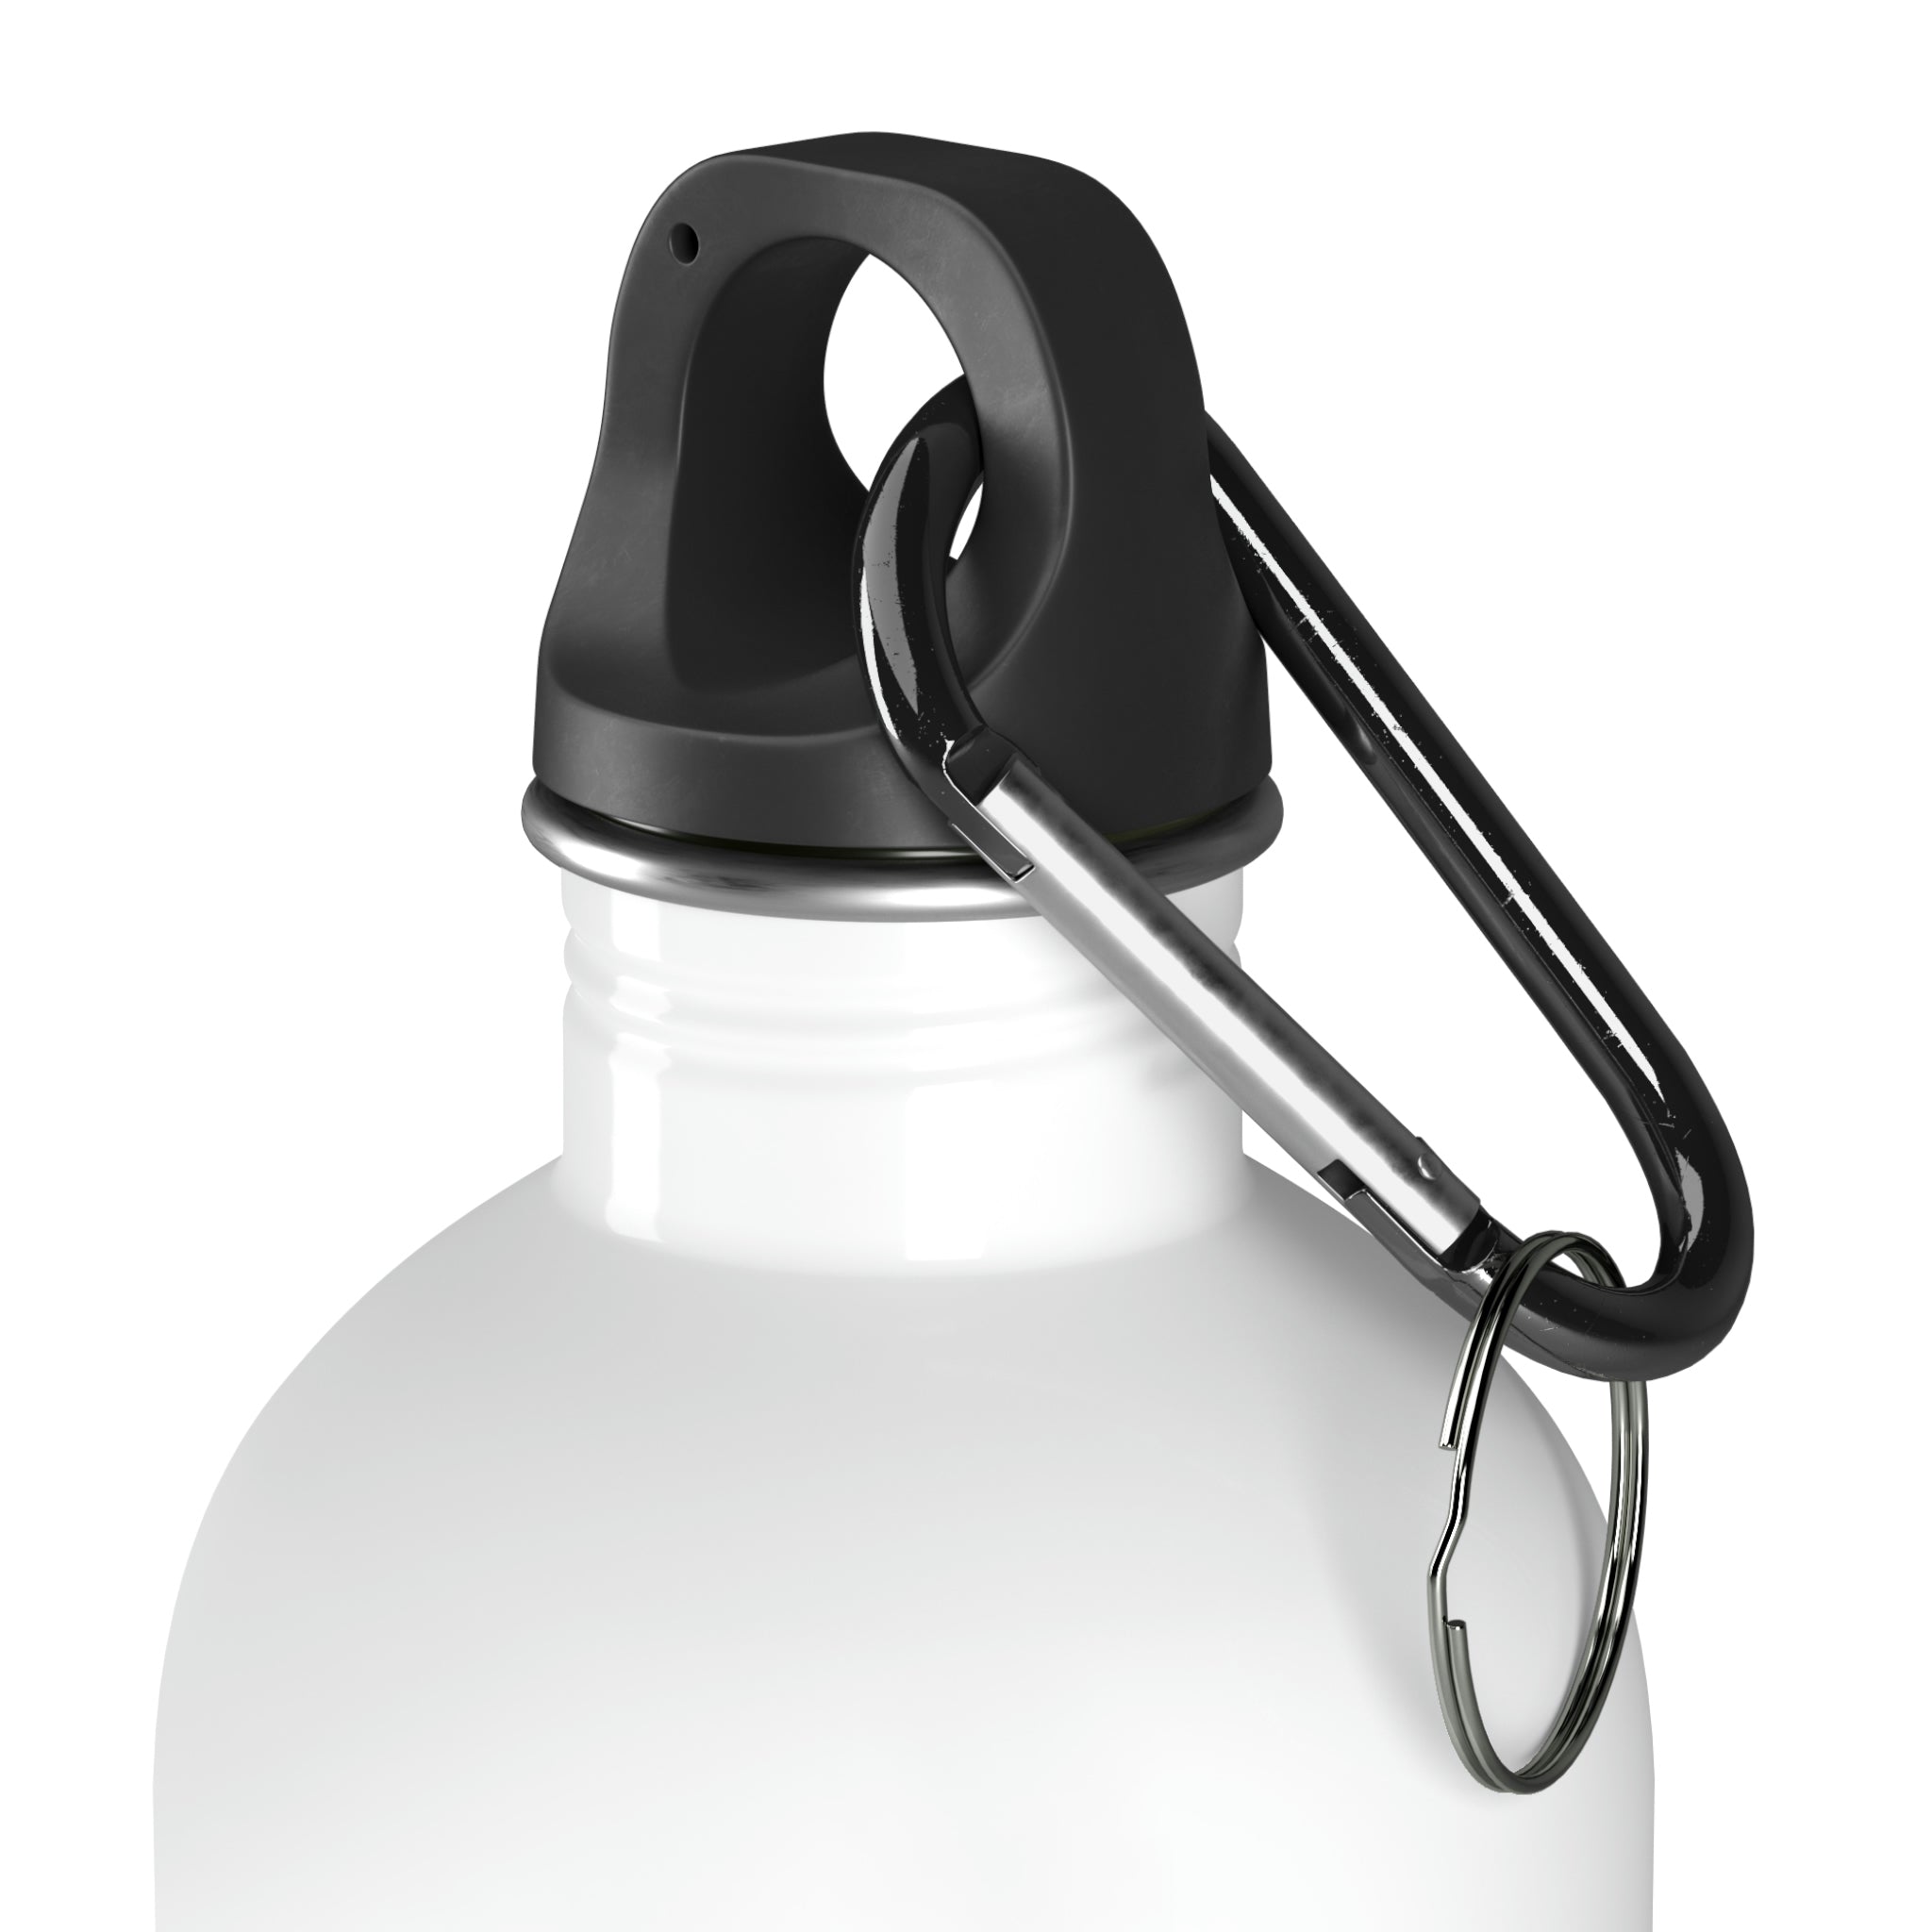 AHS Stainless Steel Water Bottle